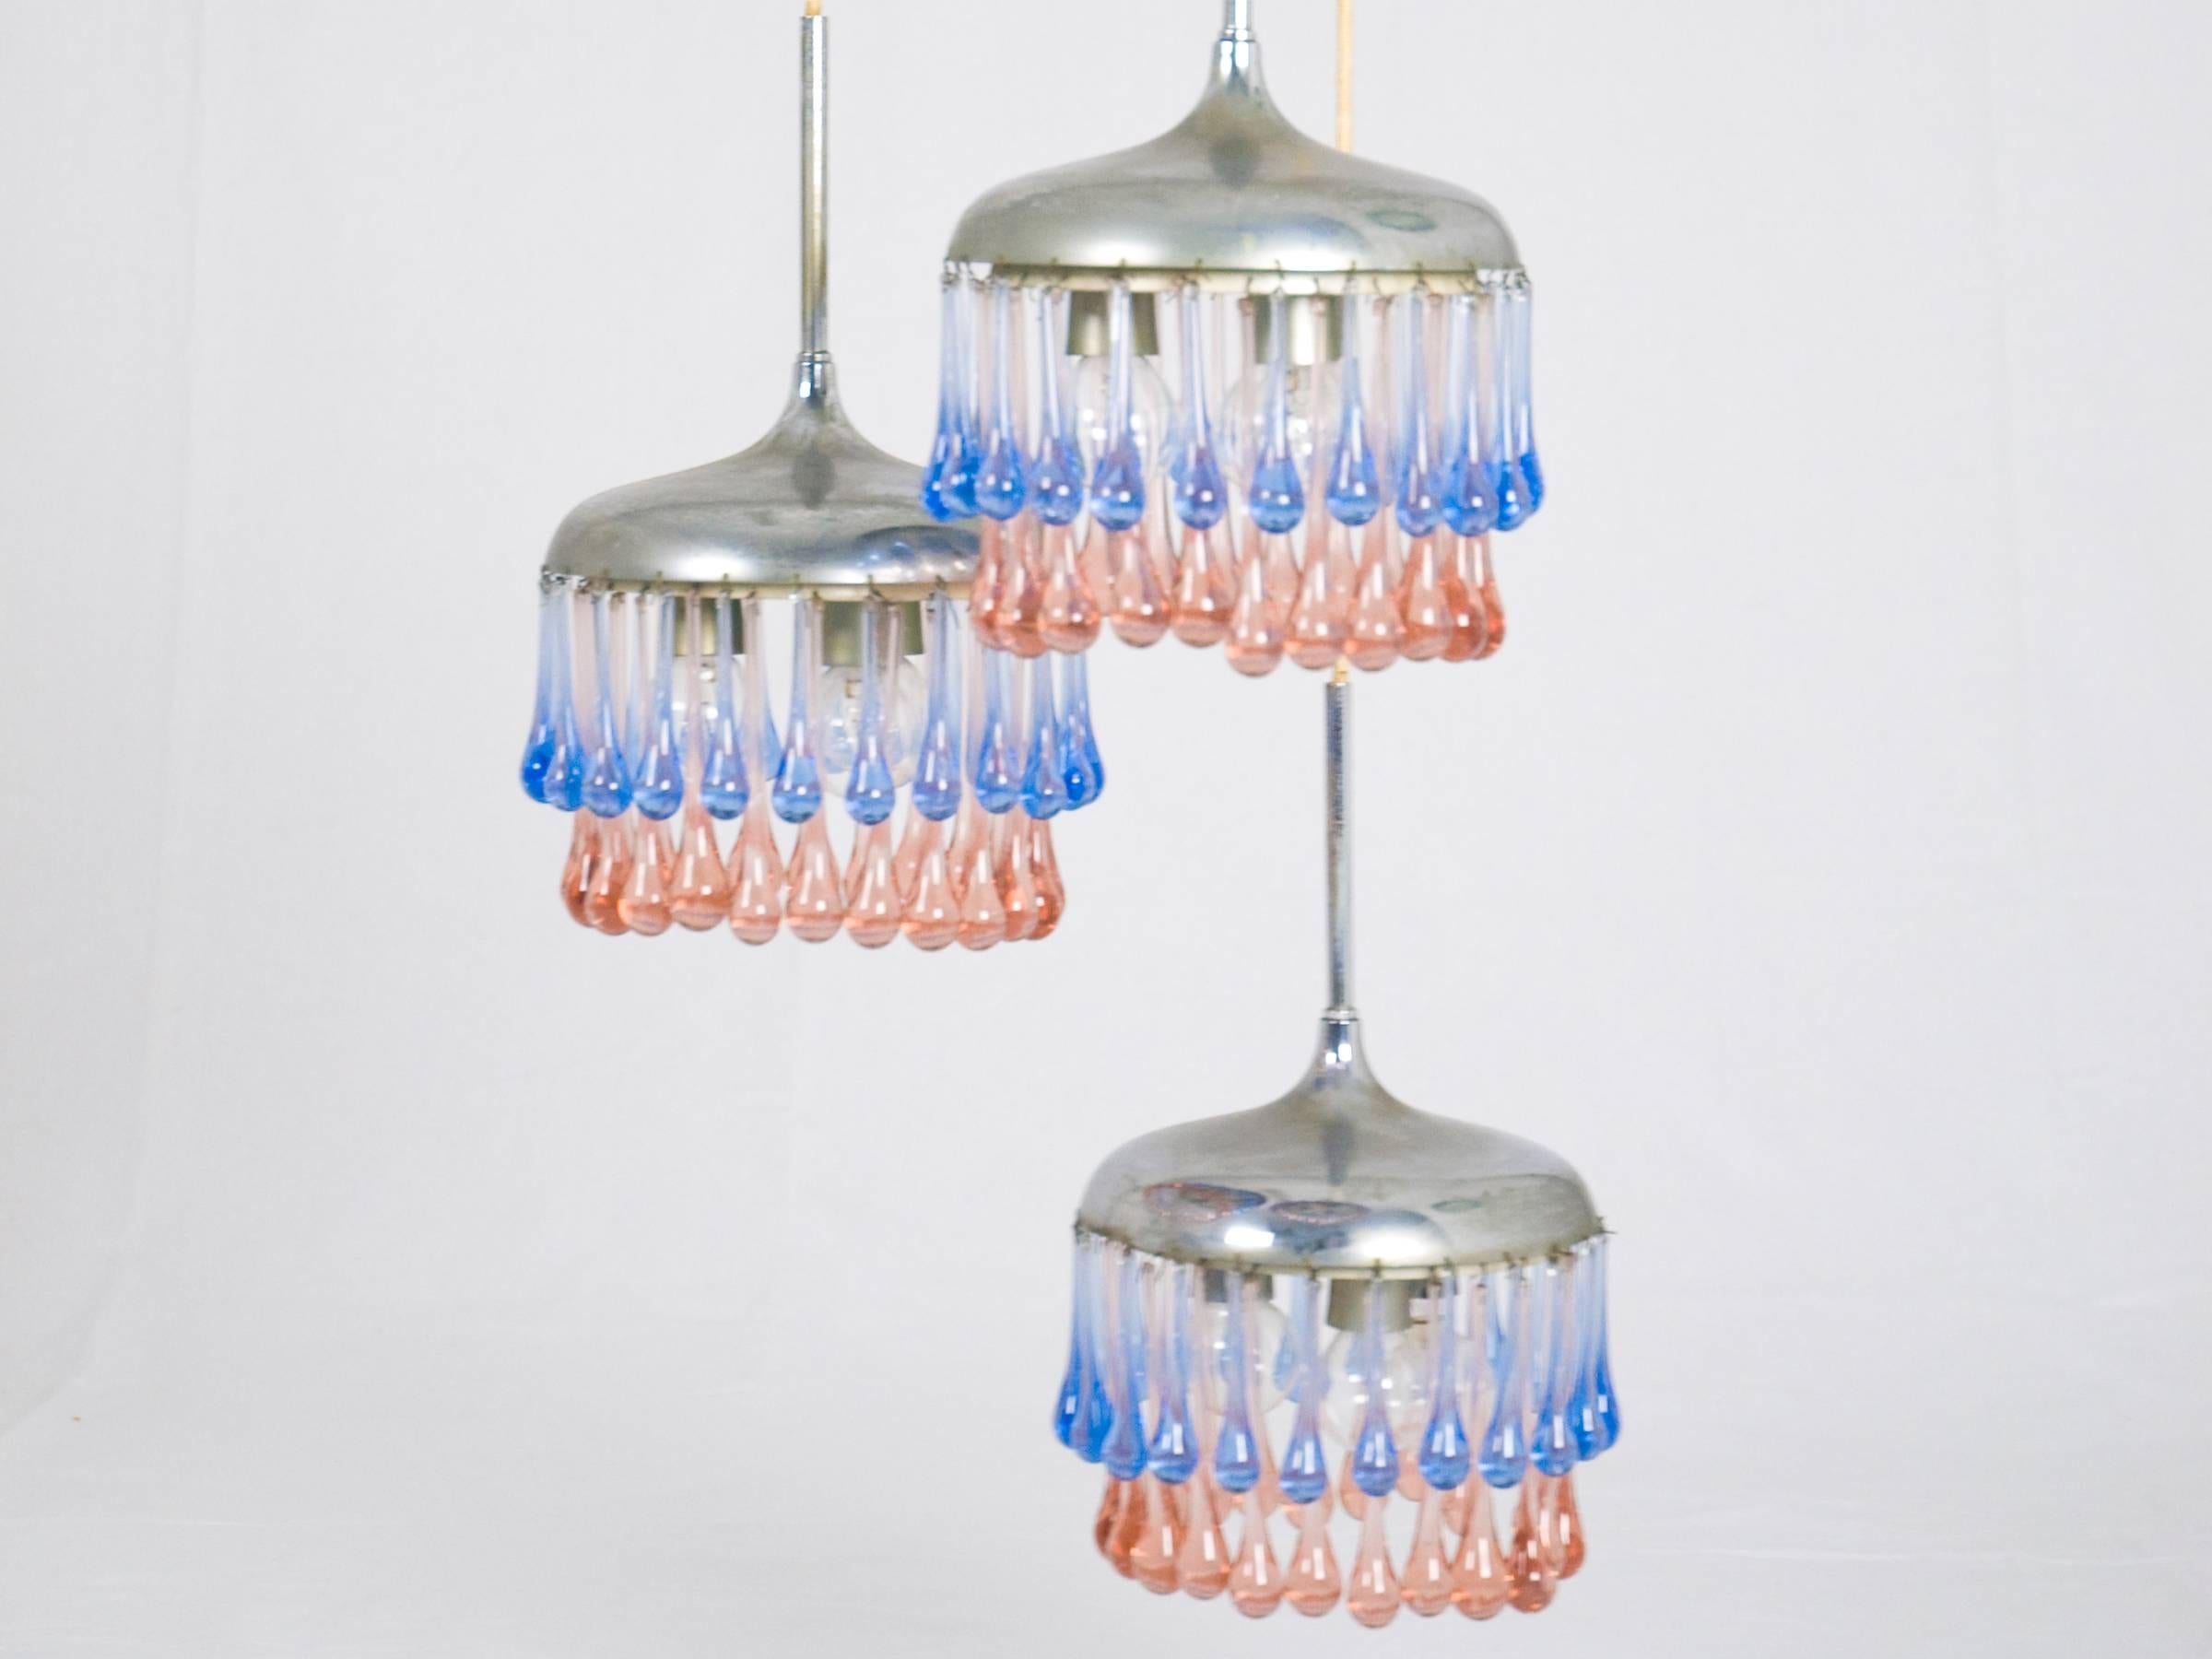 Mid-Century Modern Italian Chrome Plated and Glass 9-Light Pendant Lamp by Stilnovo, 1960s For Sale